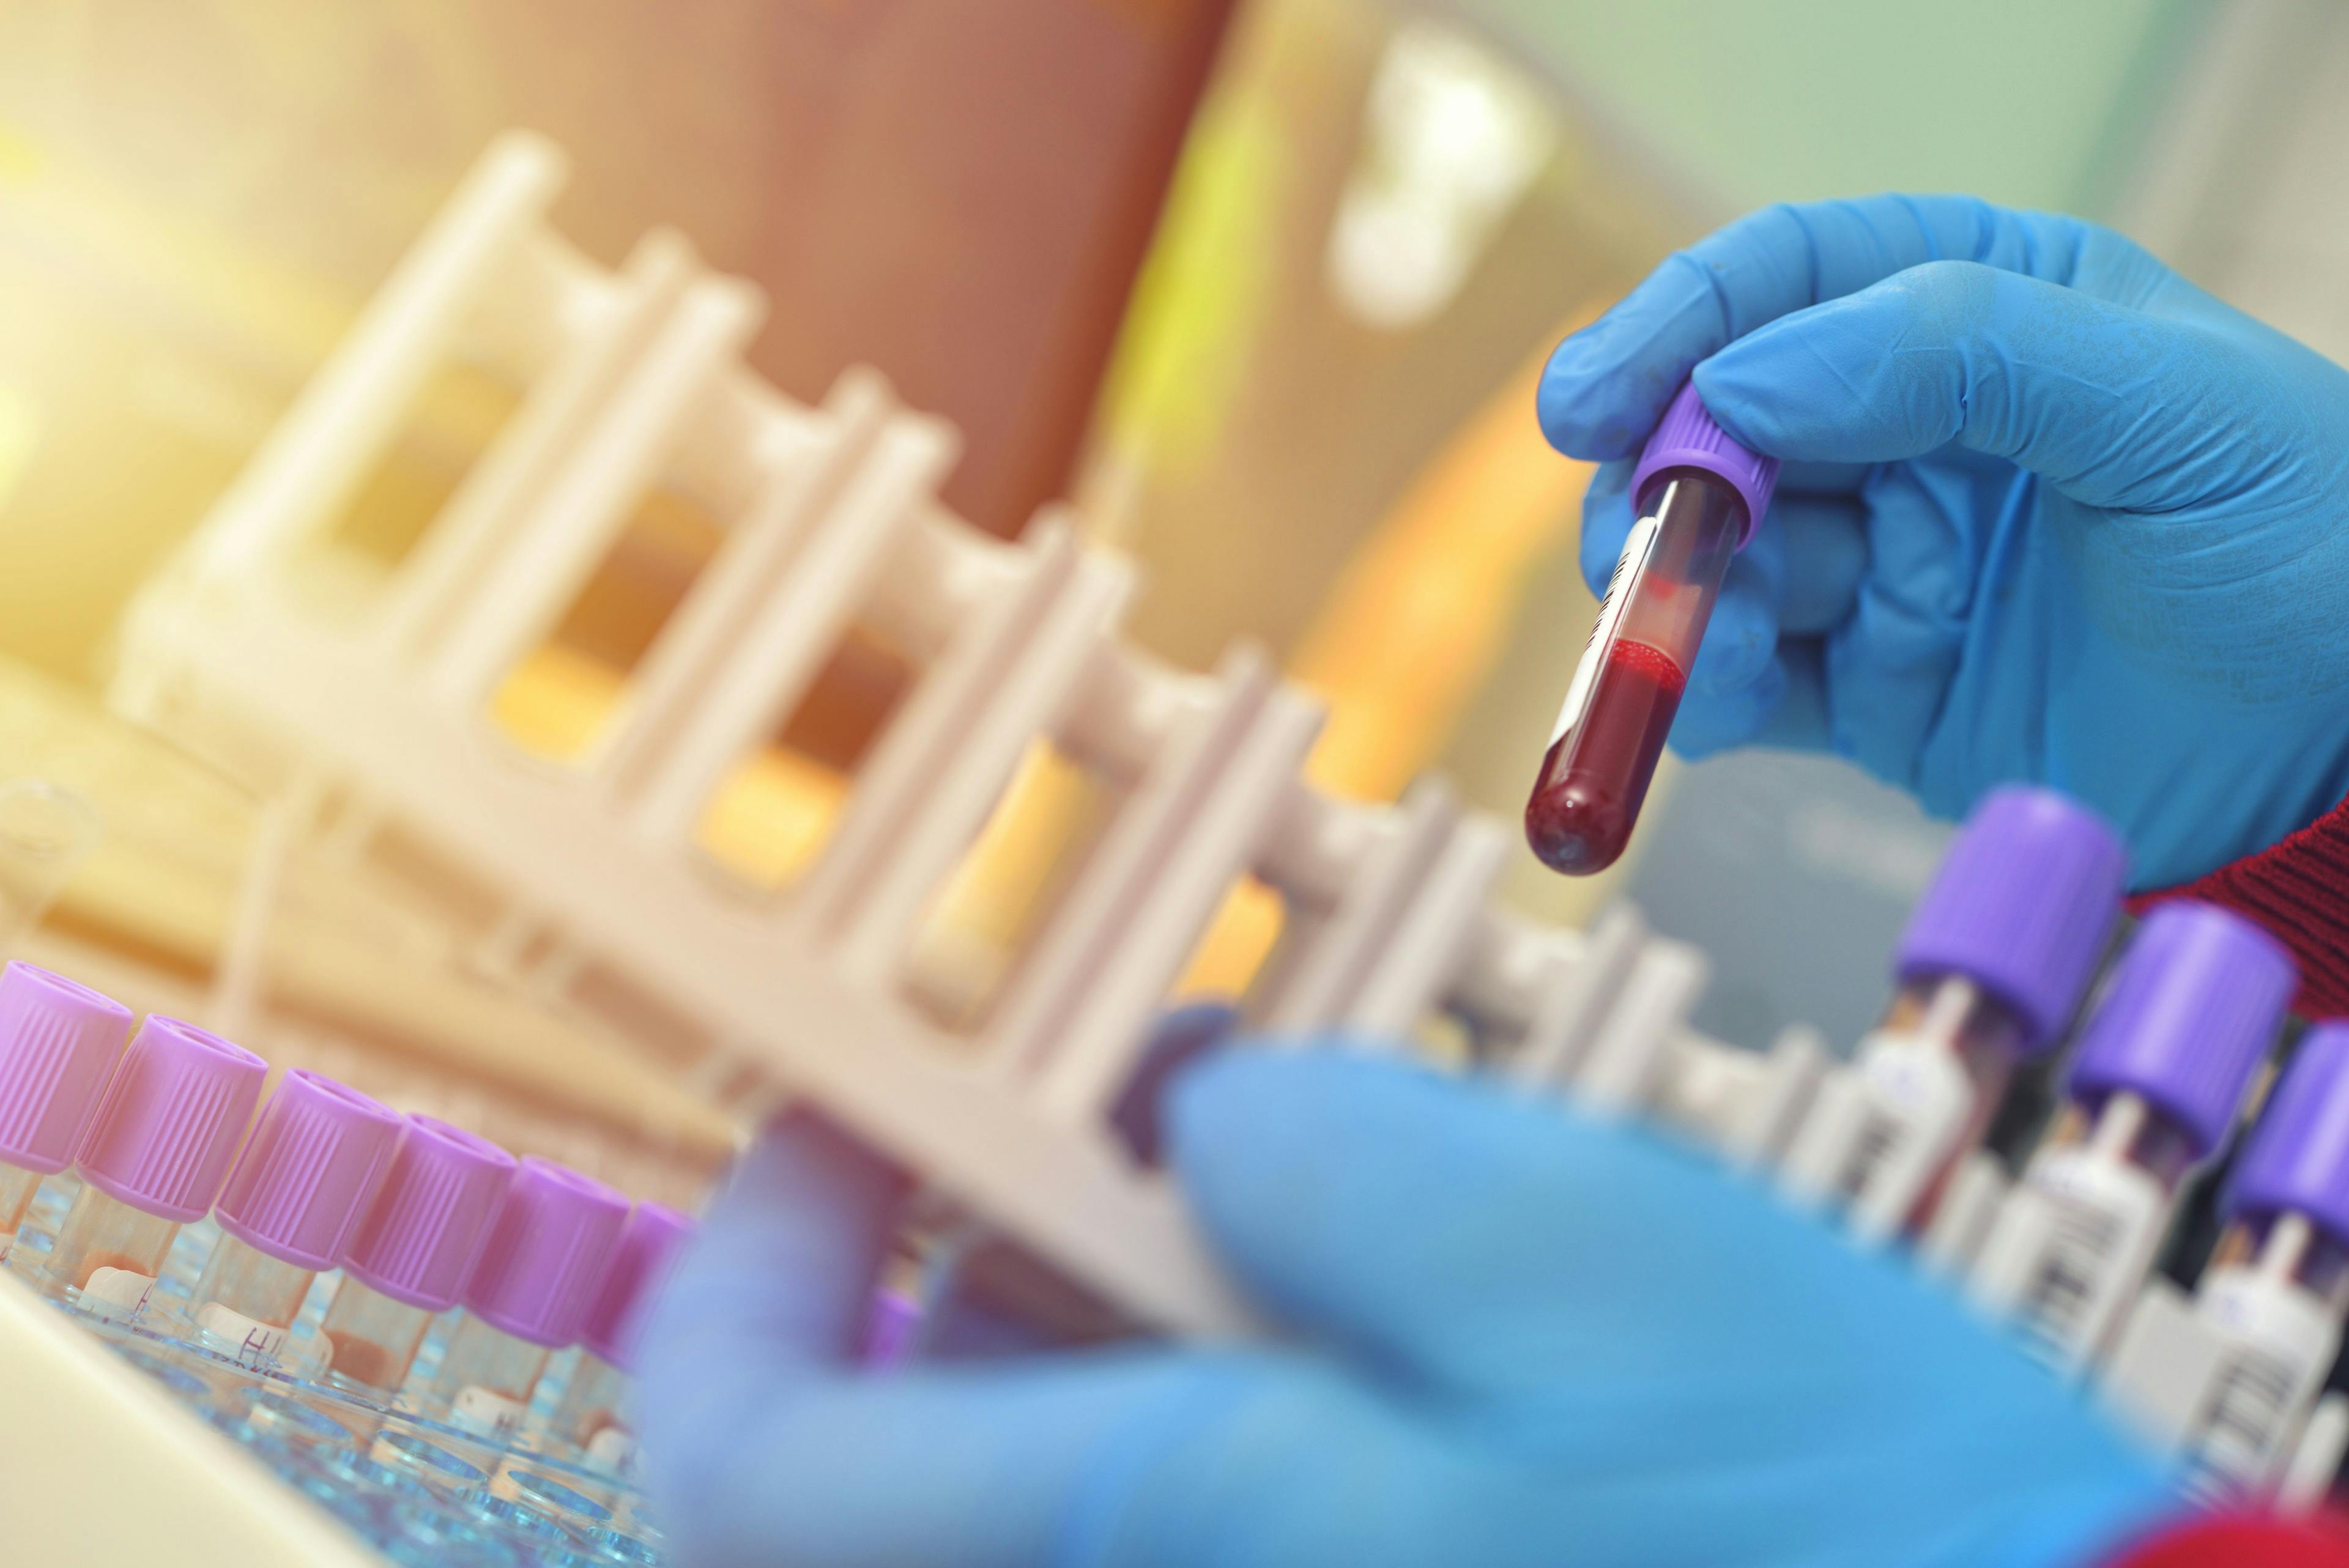 Blood samples for testing | Image credit: Daniel CHETRONI – stock.adobe.com